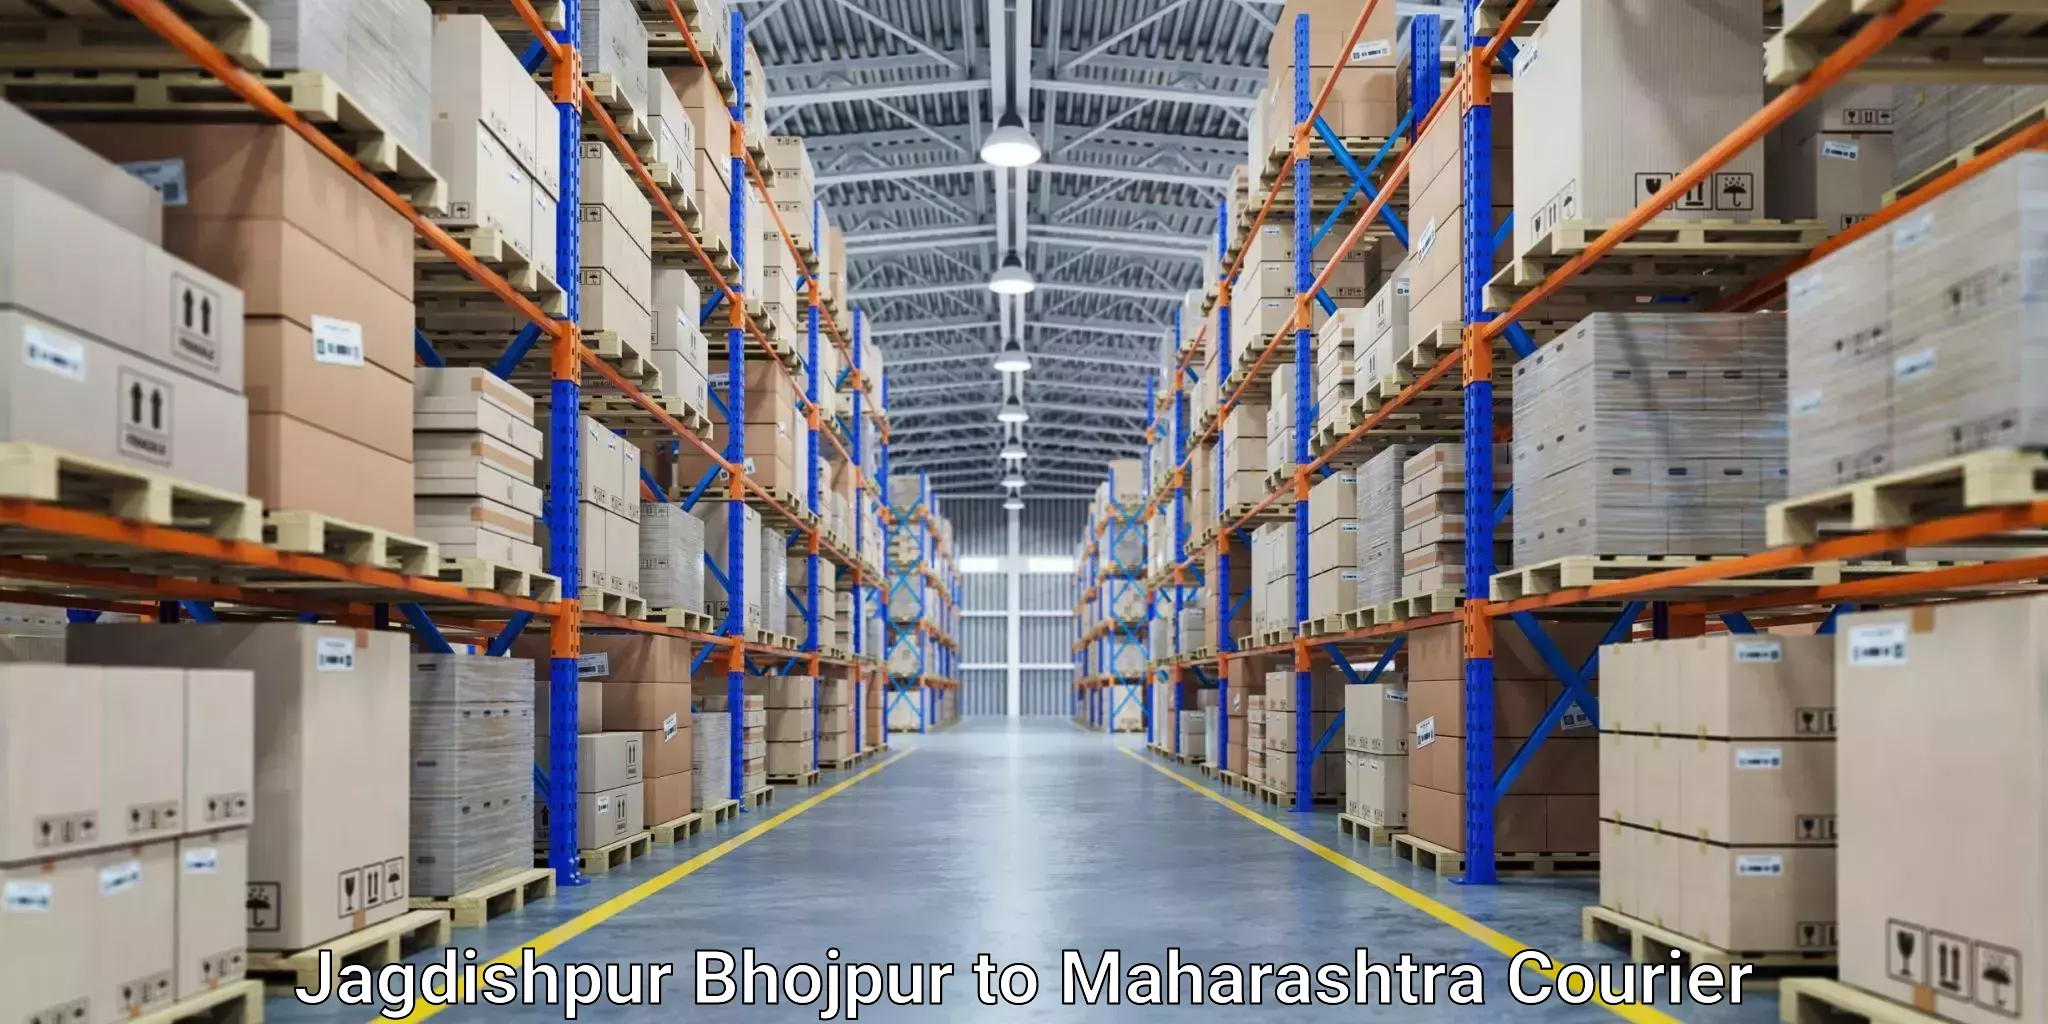 Global logistics network Jagdishpur Bhojpur to Virar